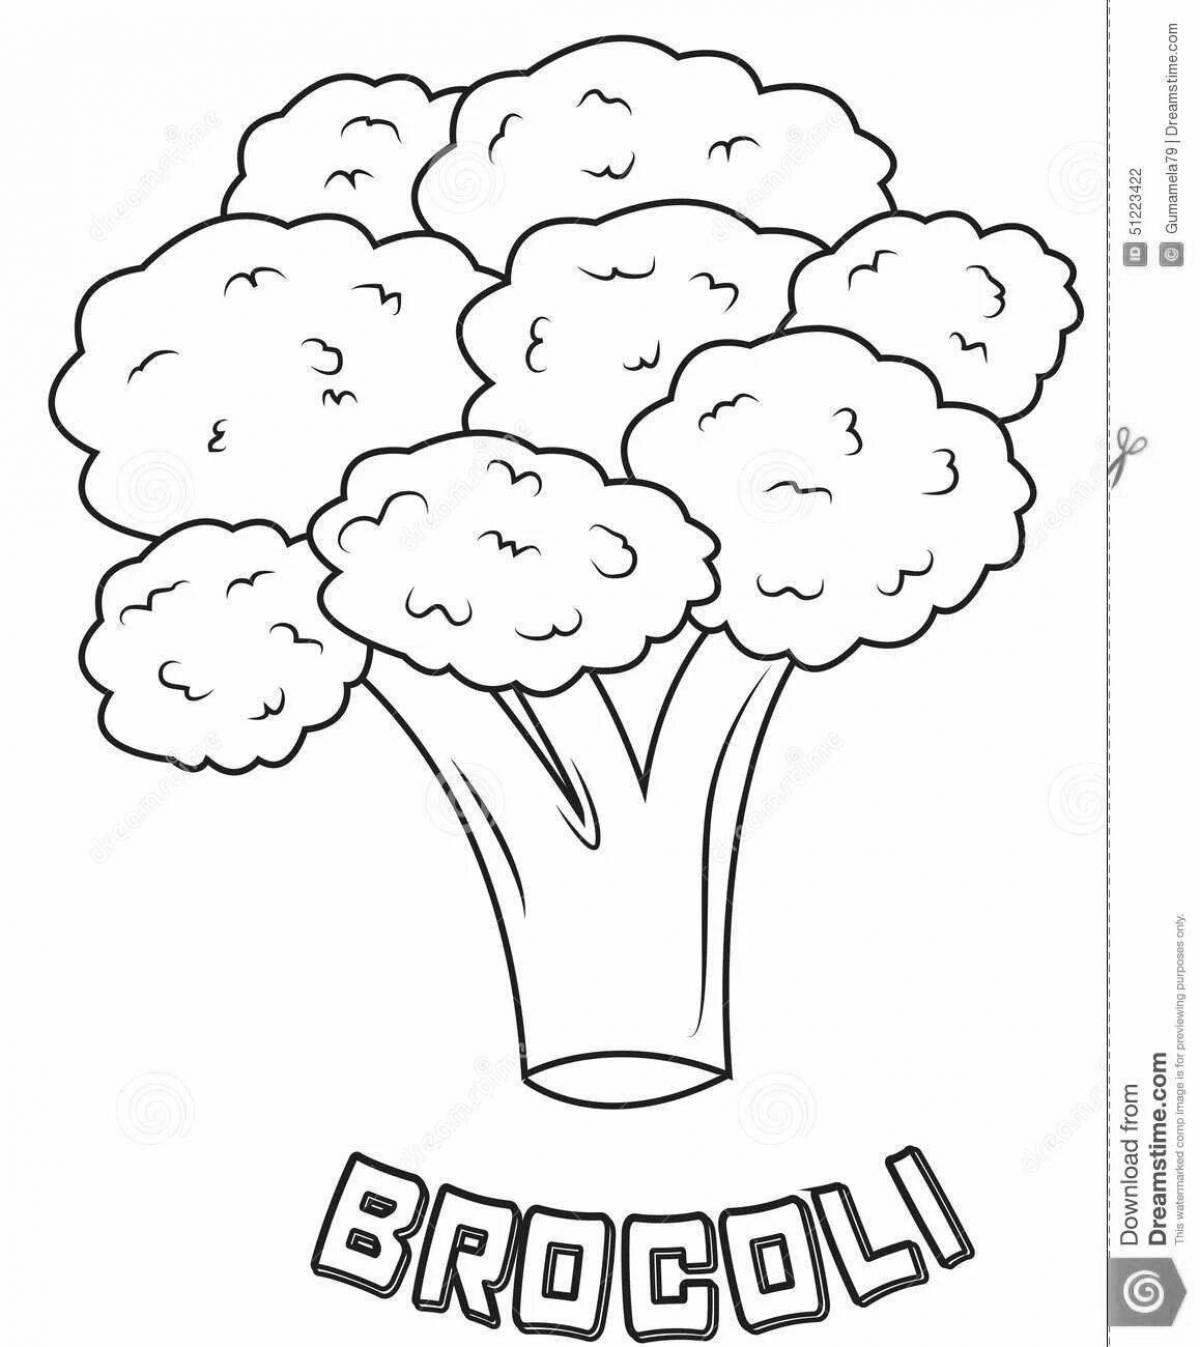 Broccoli for kids #13